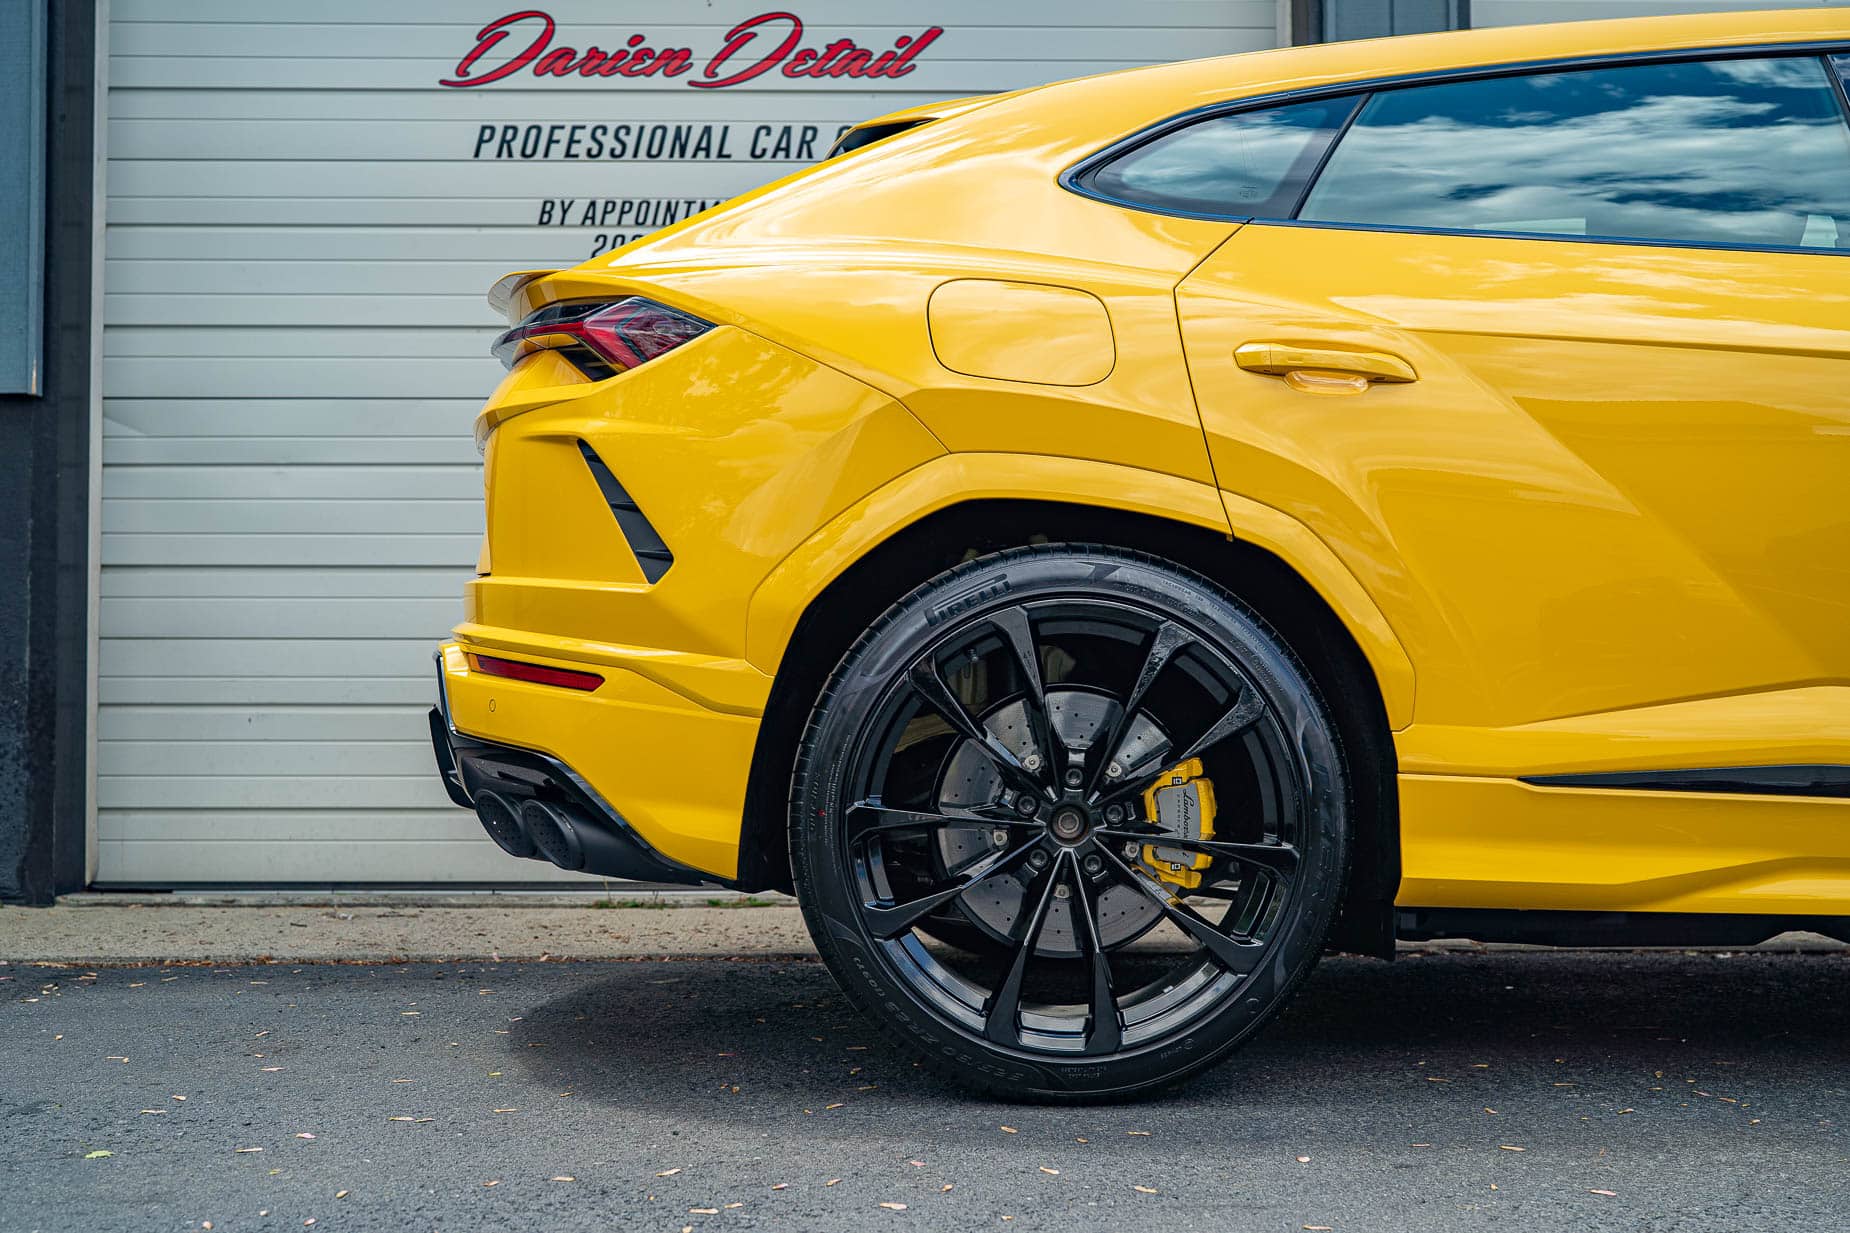 2021 Lamborghini Urus Giallo Auge Yellow Black Wheels Xpel Paint Protection Film Ppf Ceramic Coating 07